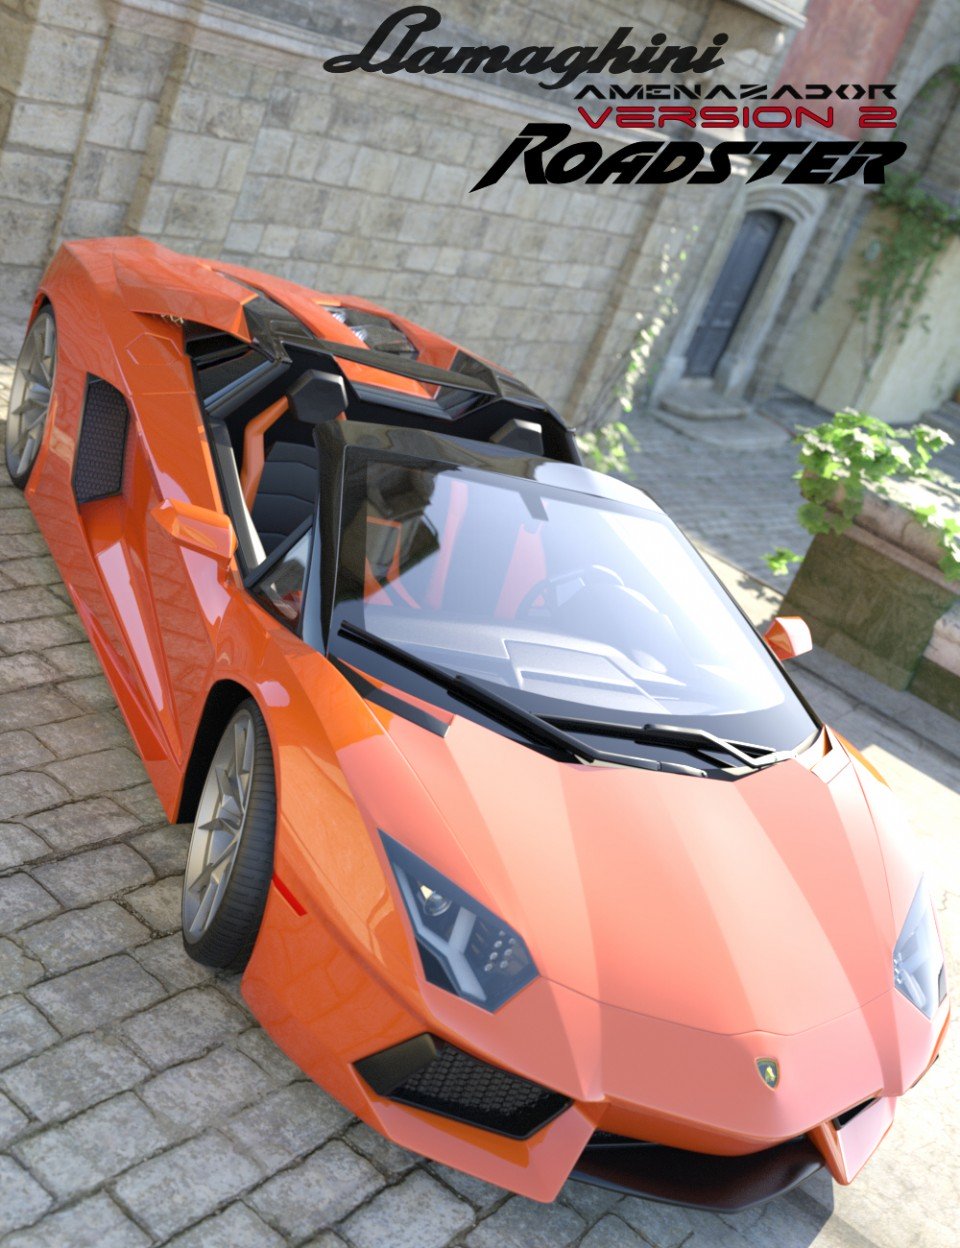 Llamaghini Amenazador Version 2 Roadster_DAZ3D下载站